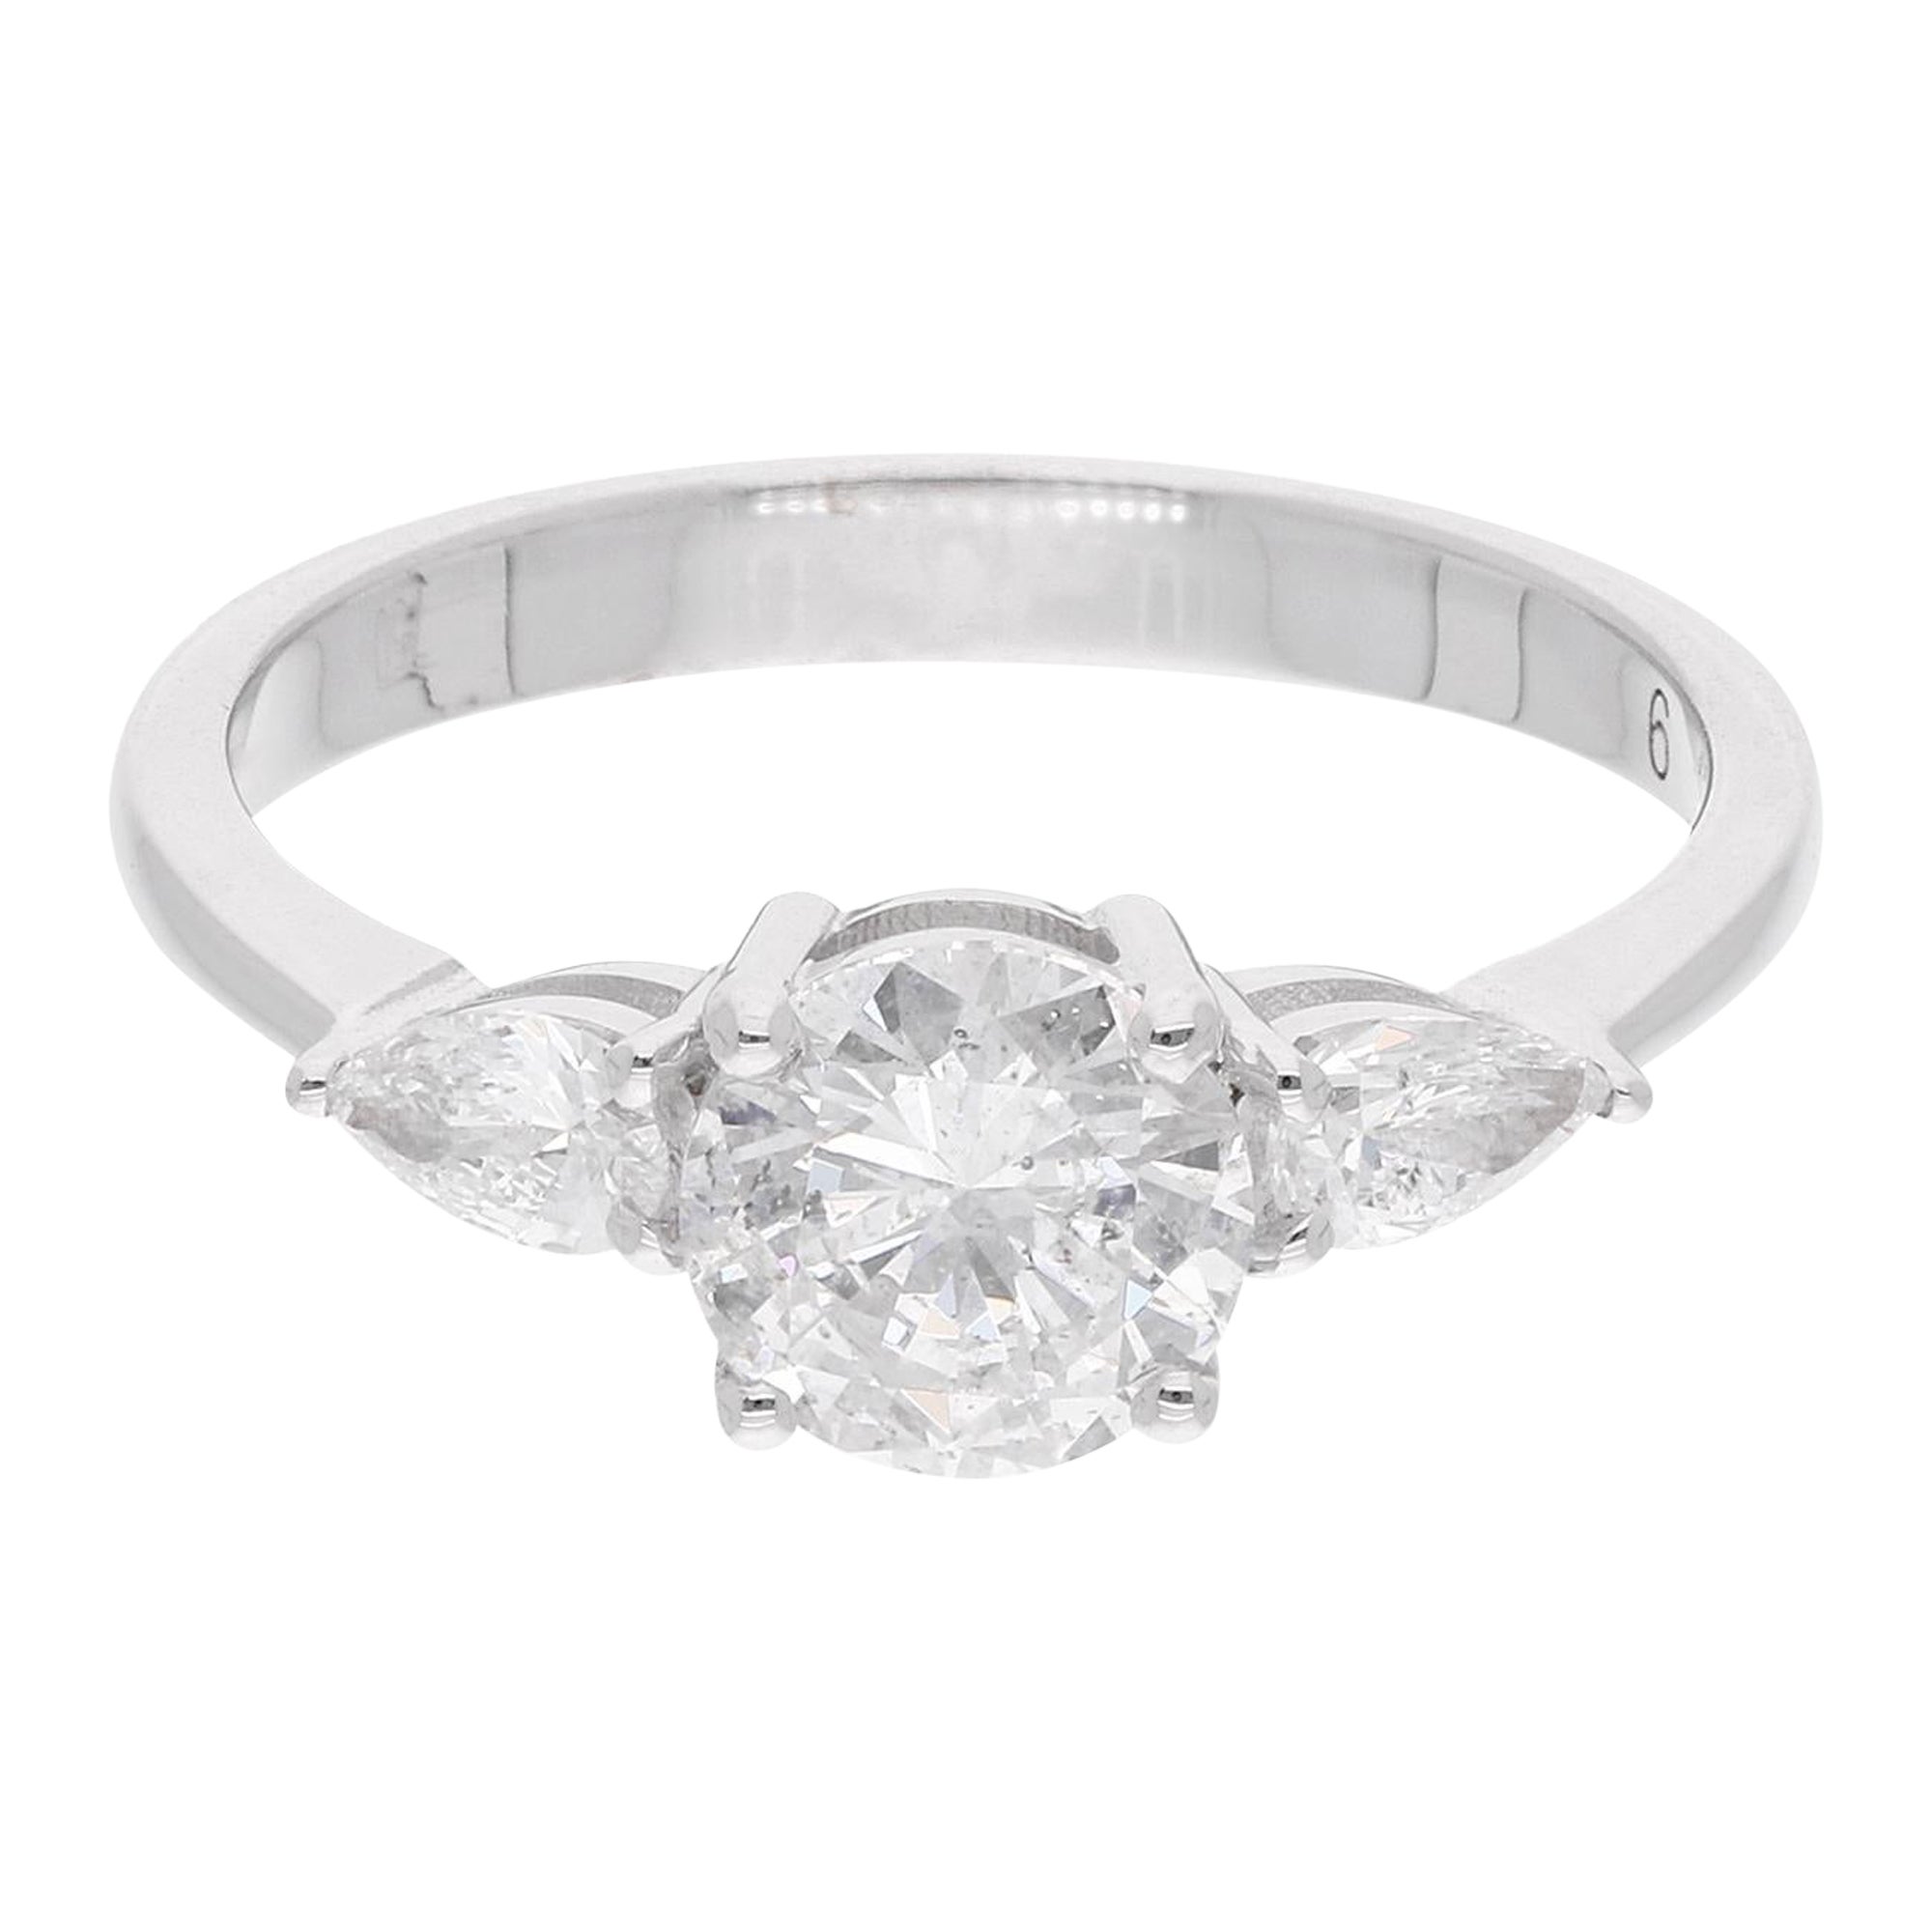 1.30 Carat Round Pear Diamond Wedding Ring 18 Karat White Gold Handmade Jewelry